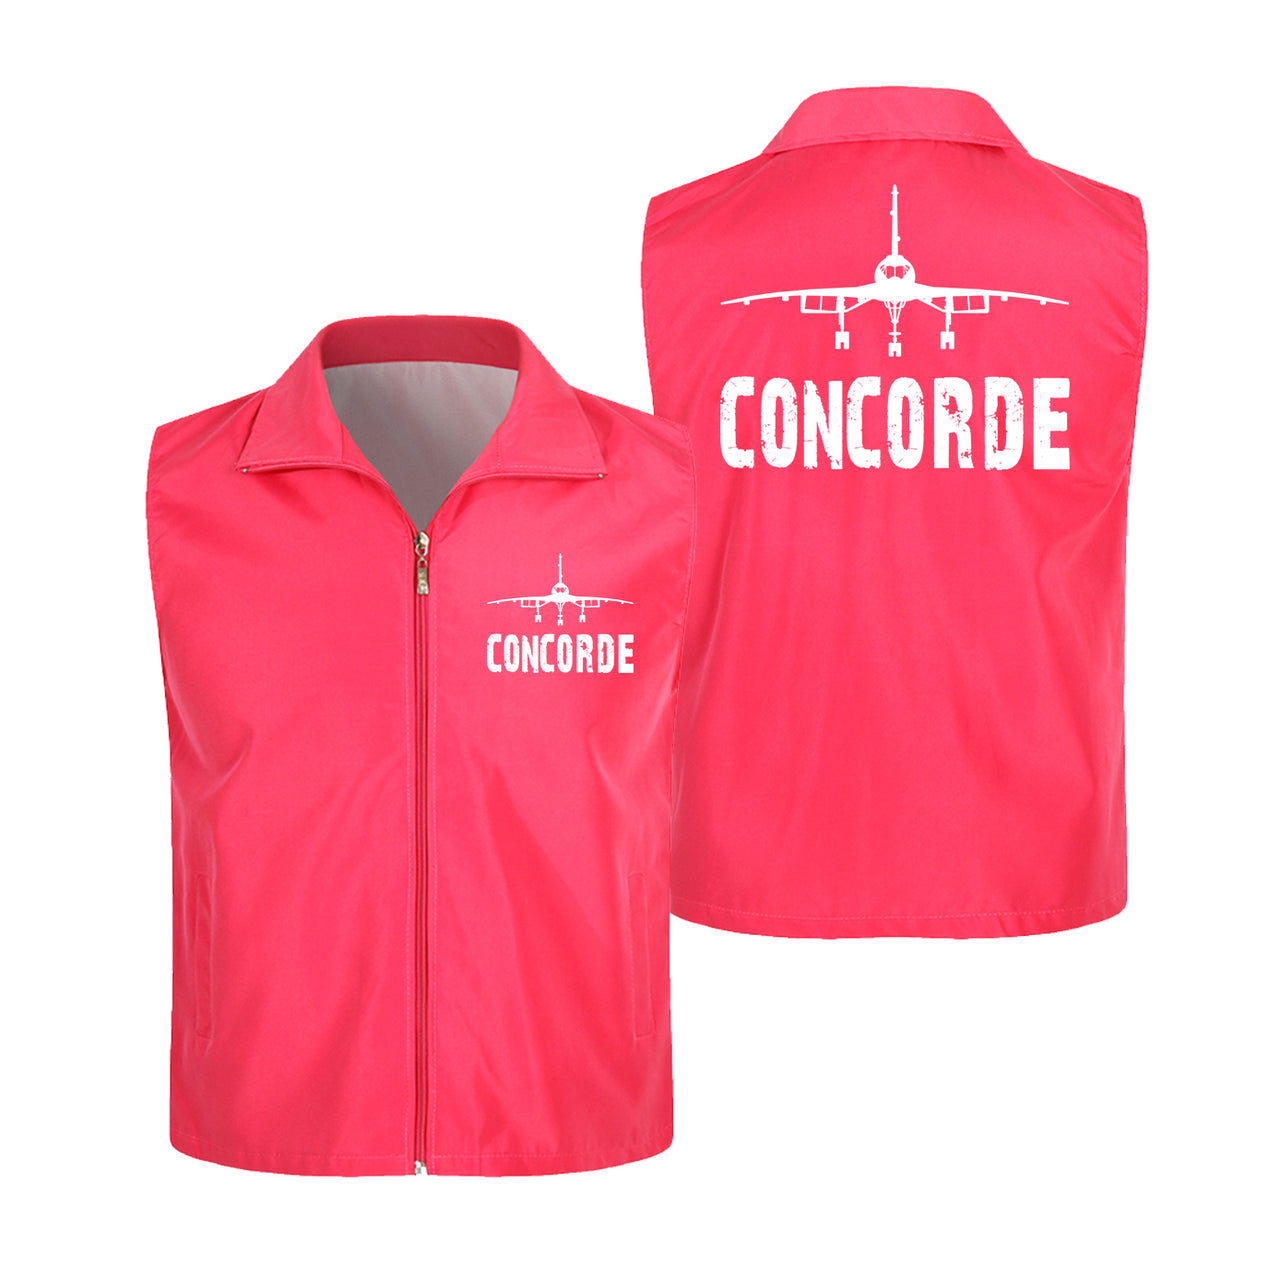 Concorde & Plane Designed Thin Style Vests